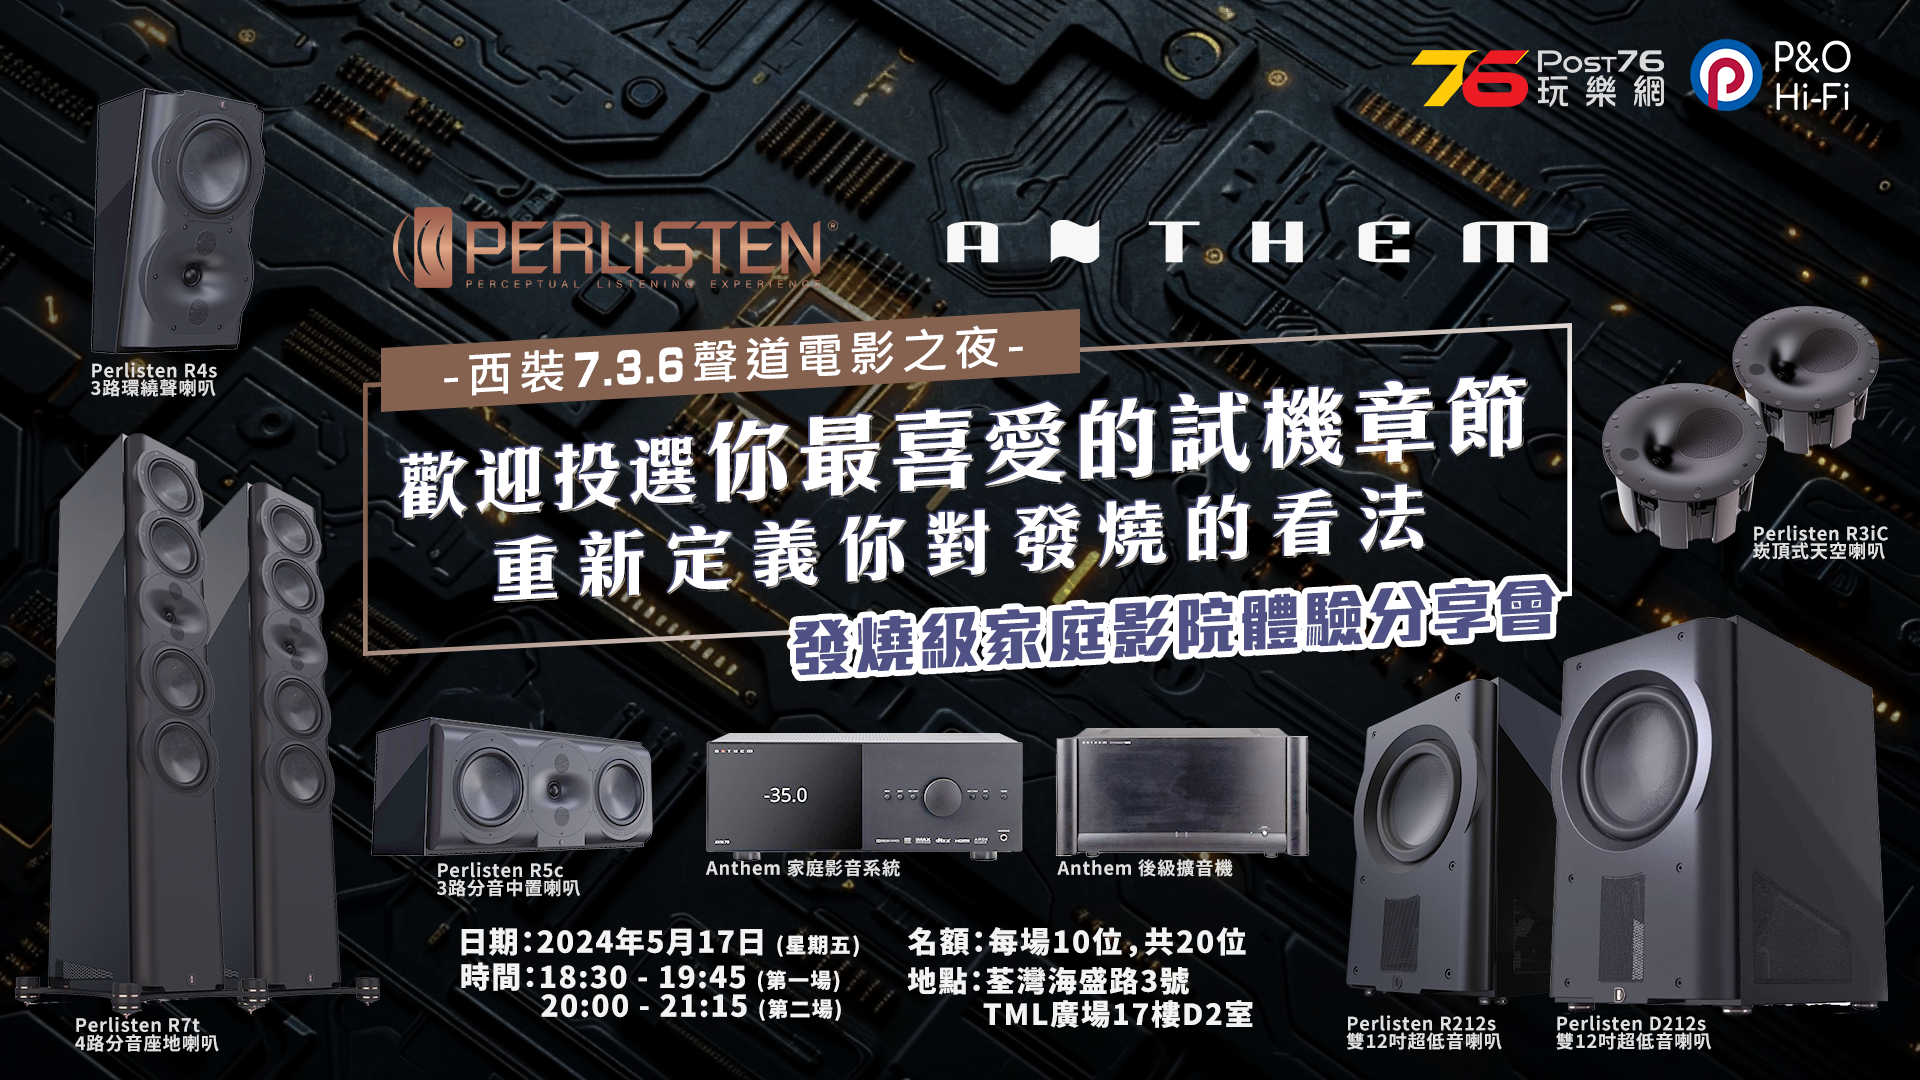 [Event Registration]PERLISTEN Suits 7.3.6 Channel Movie Night – Site Events – Post76.hk